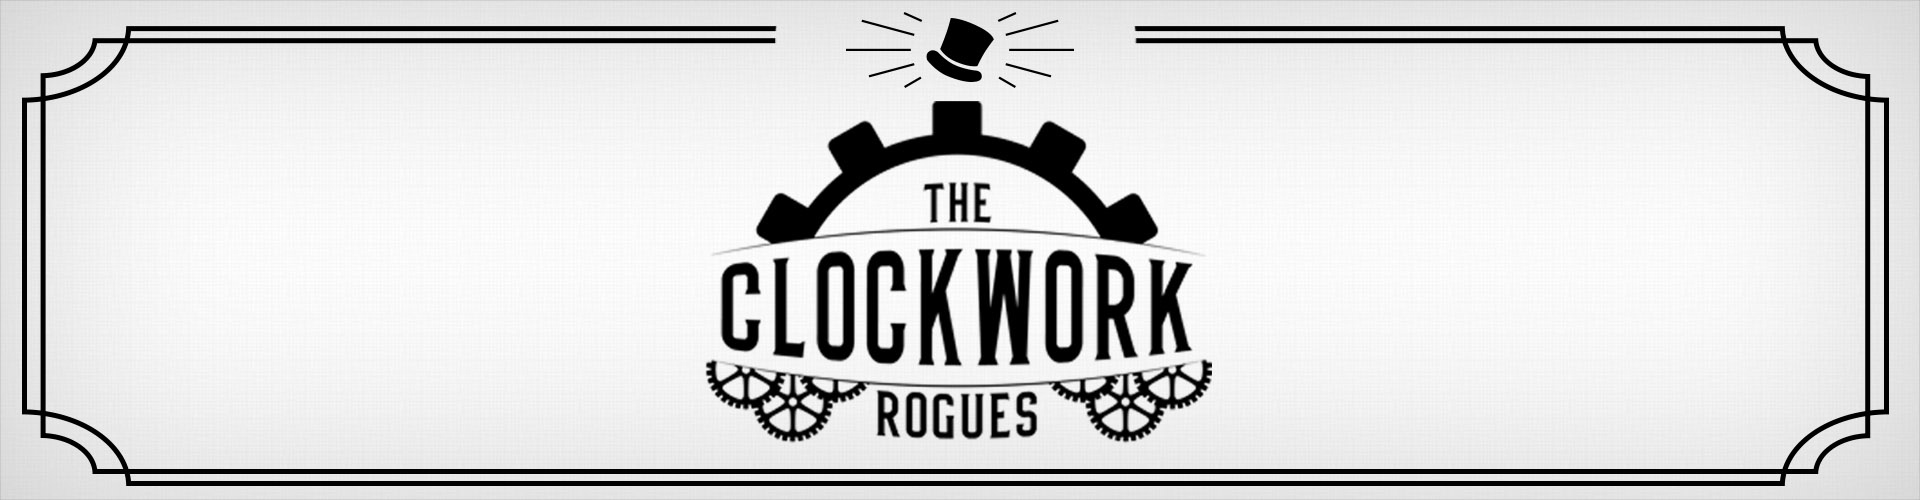 The Clockwork Rogues